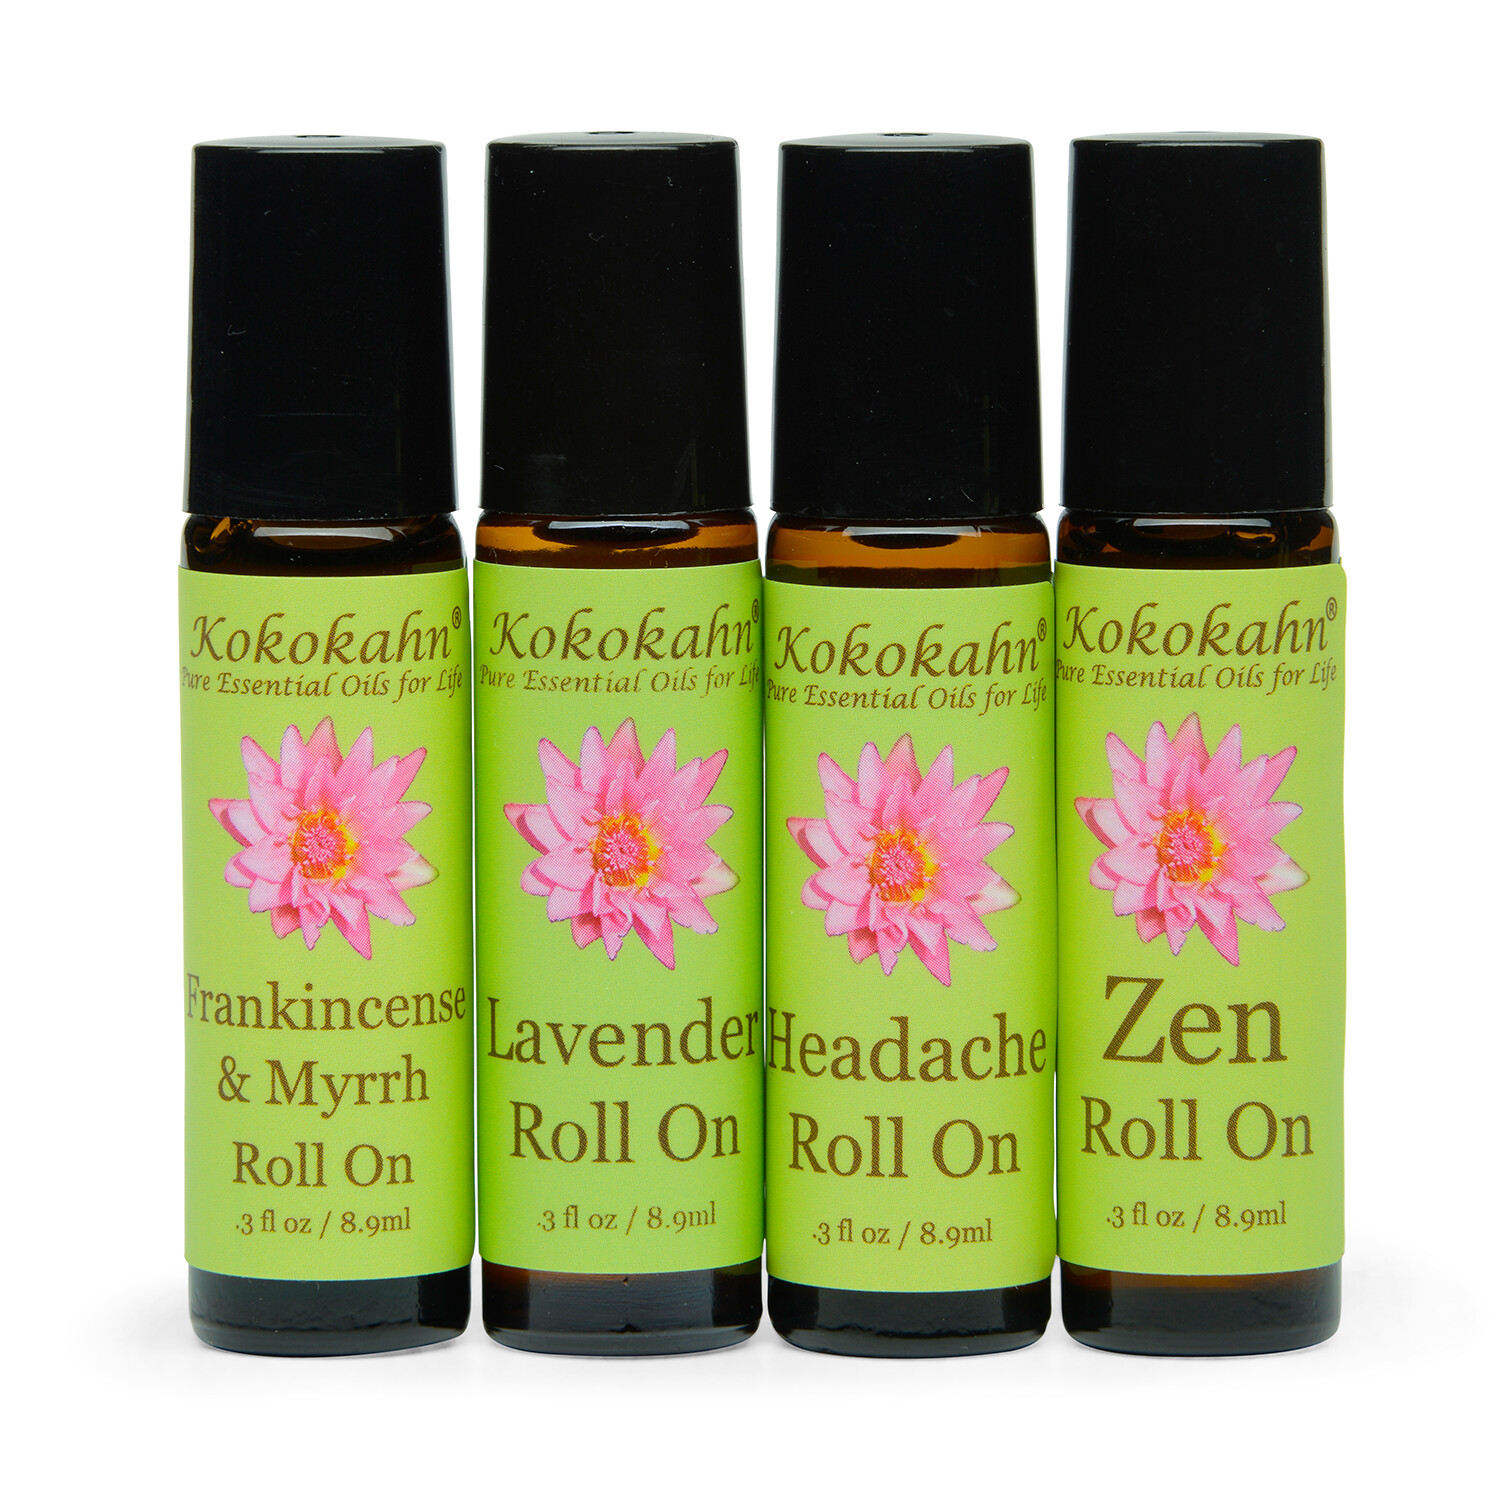 Aromatherapy Roll On Gift Set | Kokokahn Essential Oils